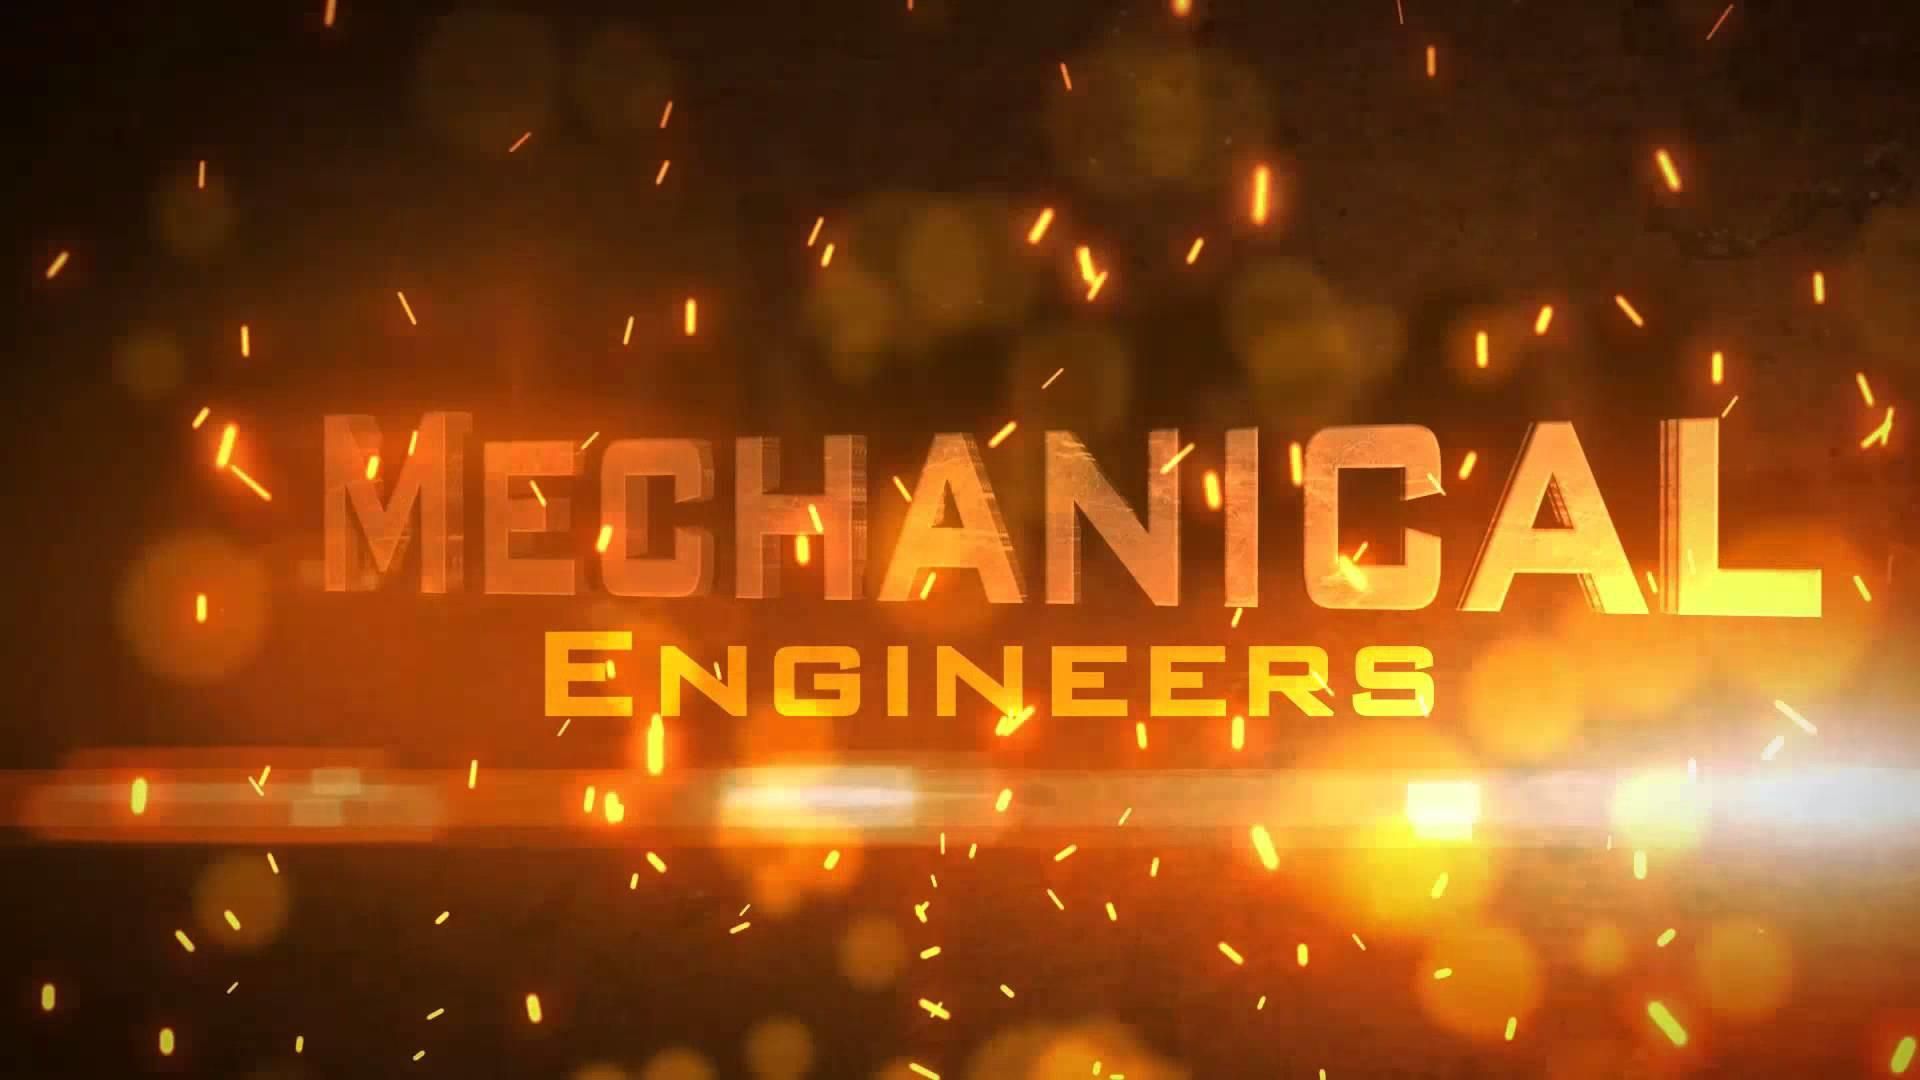 Mechanical Engineering Wallpaper on